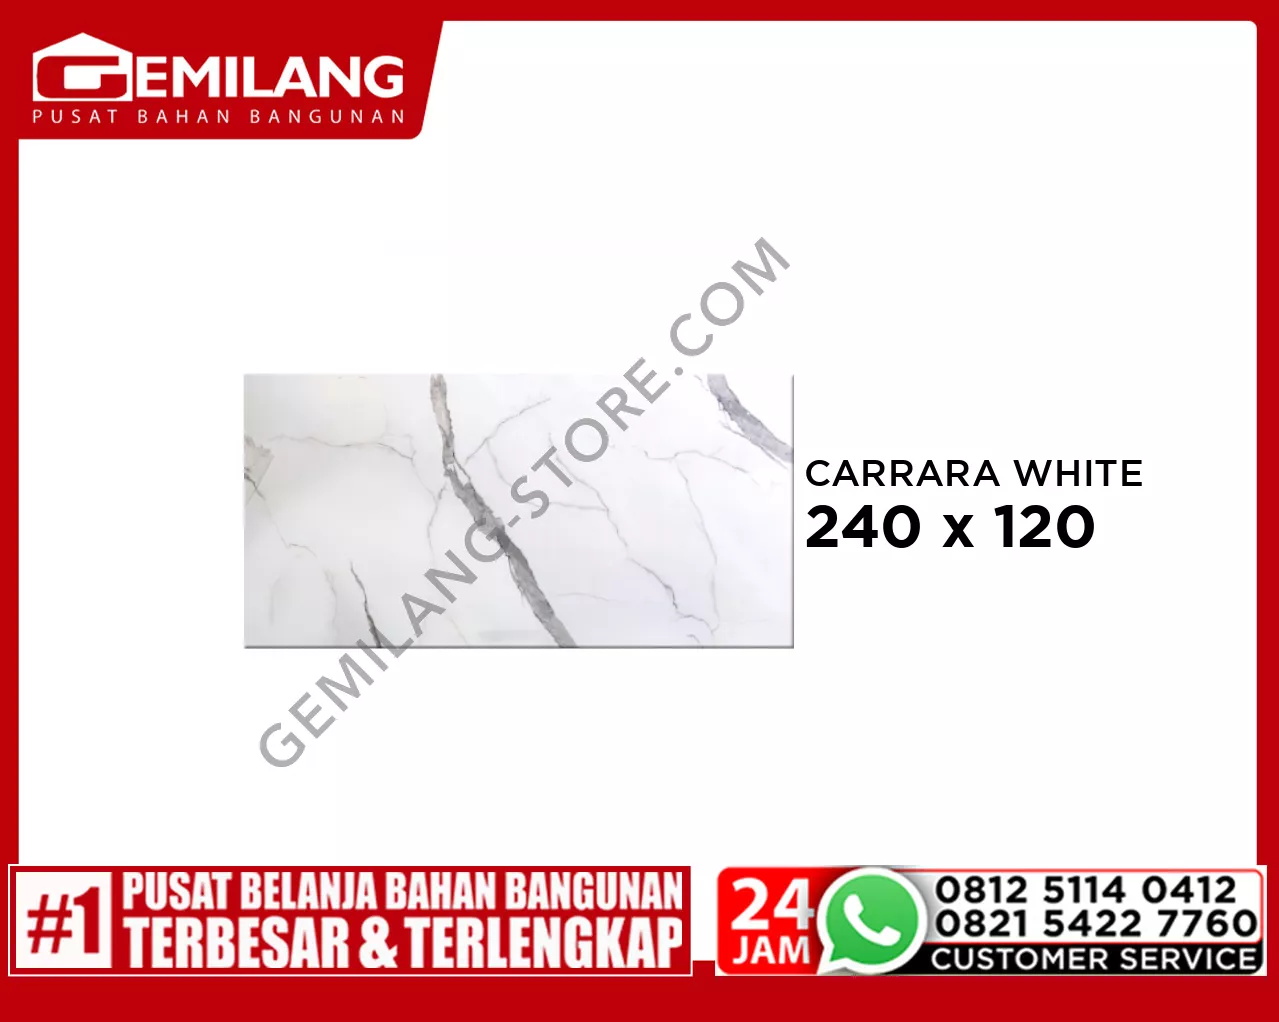 MARCO GRANIT CARRARA WHITE AL0124B09-003 240 x 120